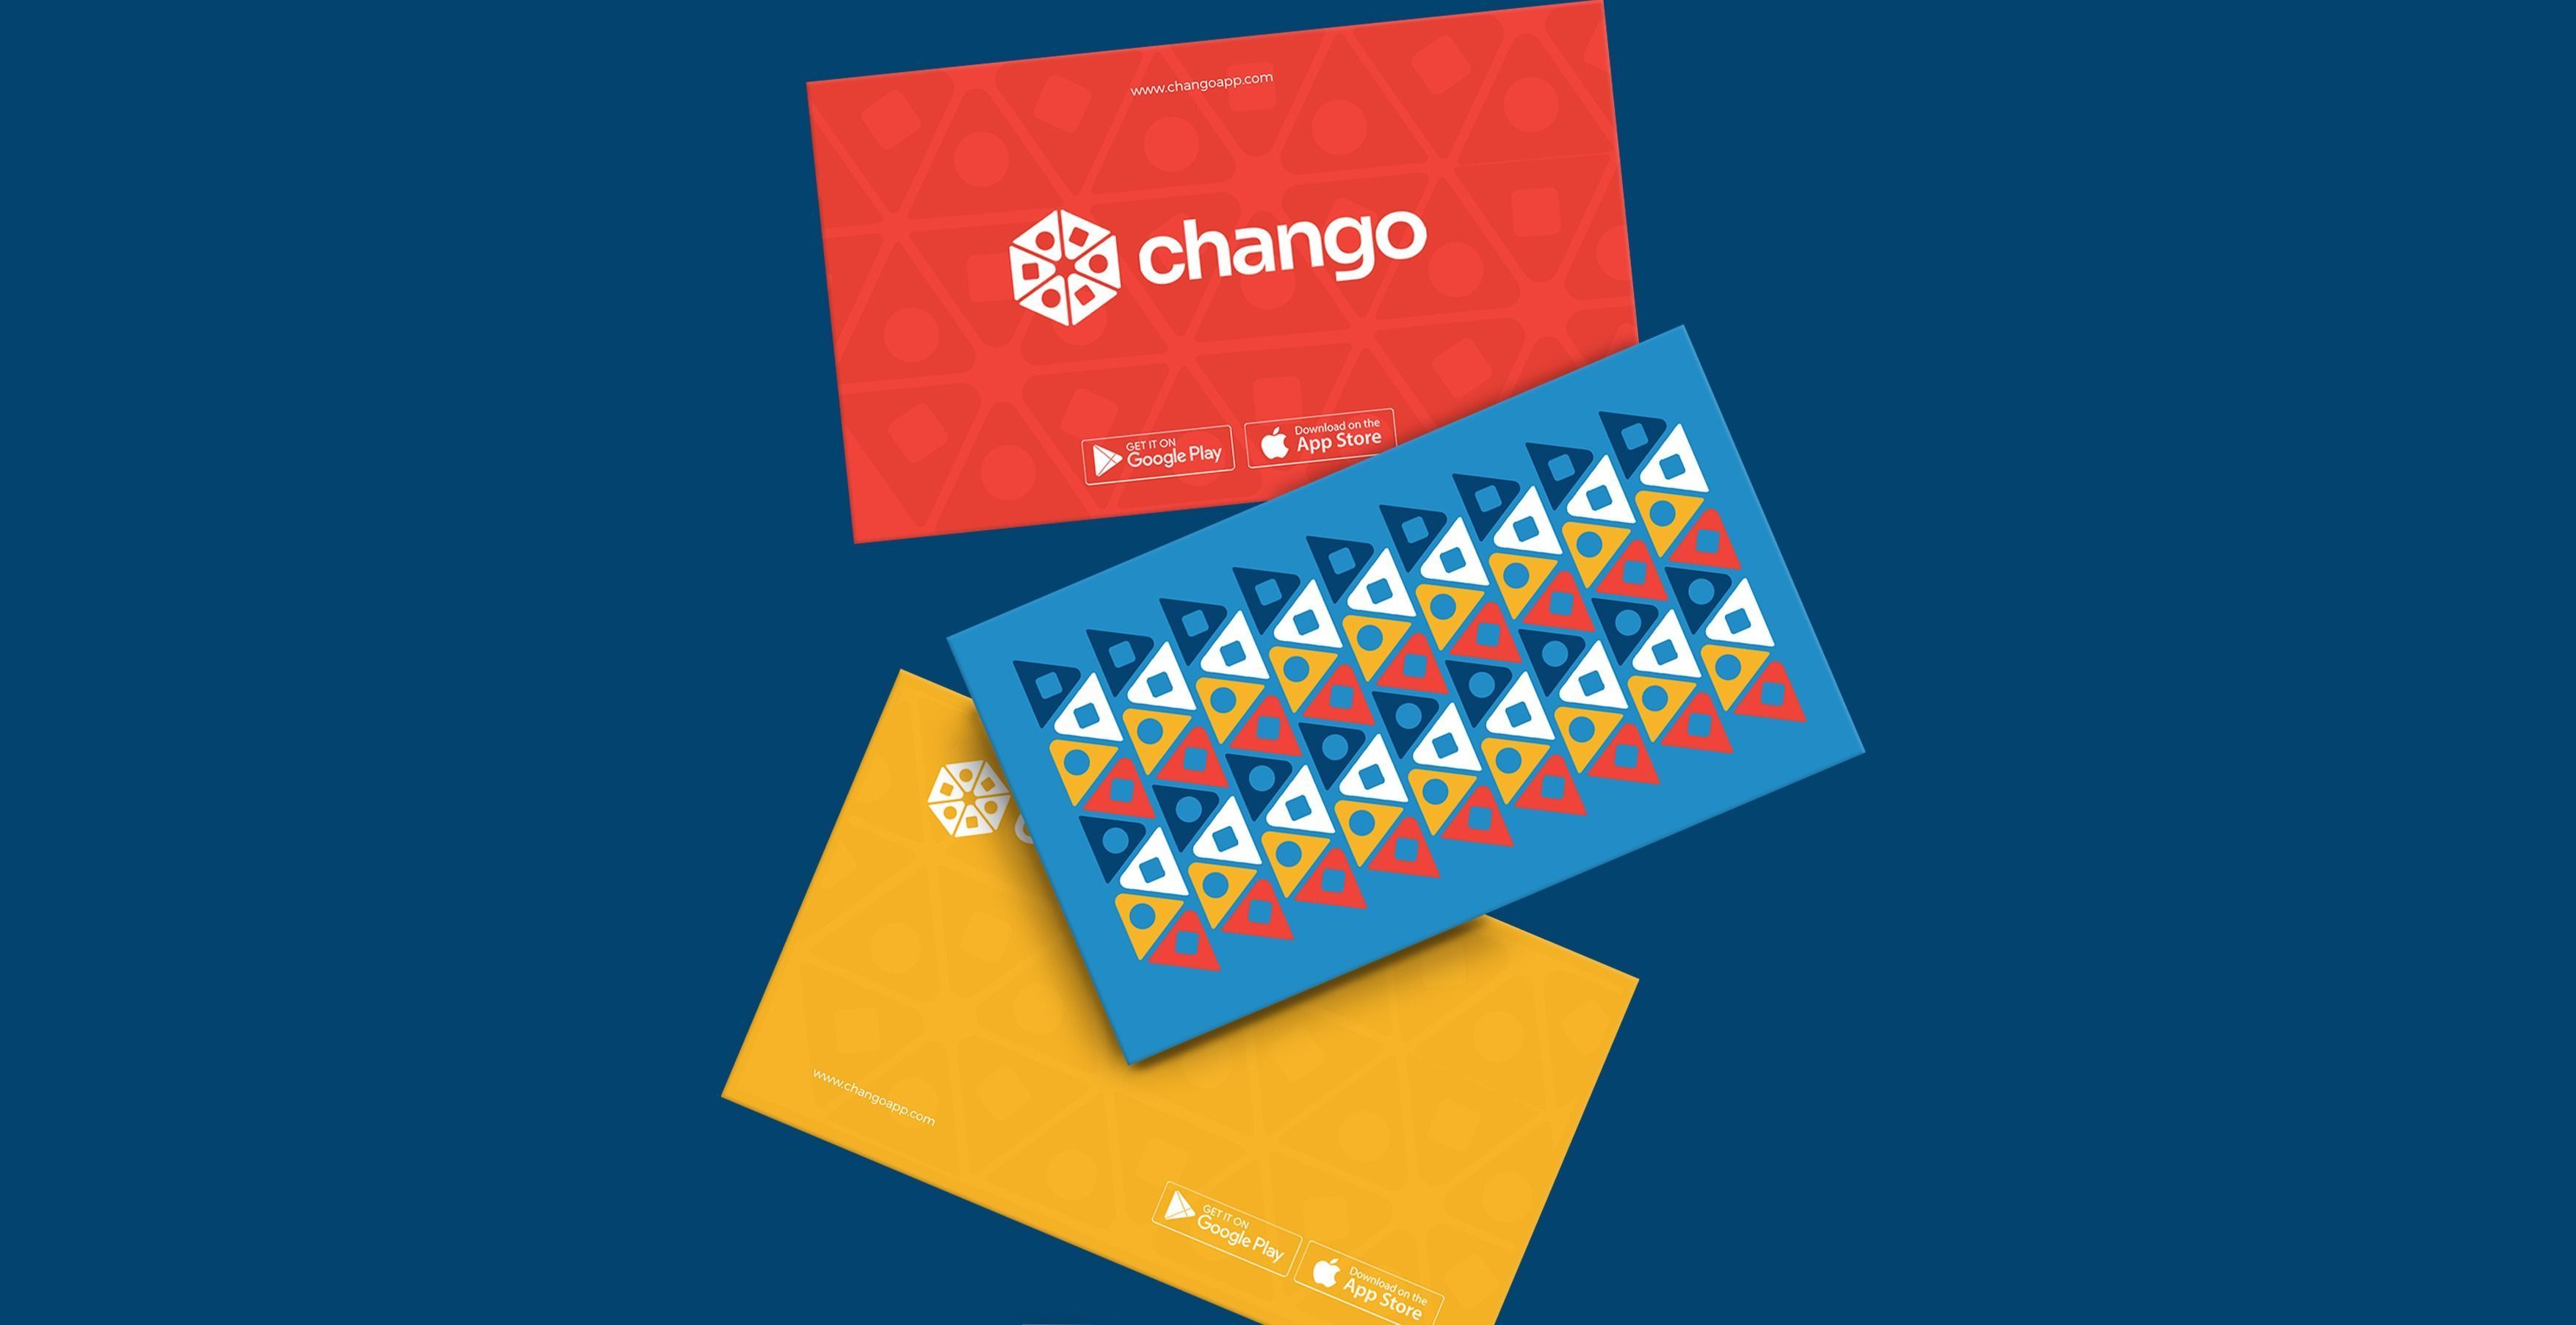 ThirdLaw branding and web design - Chango-11